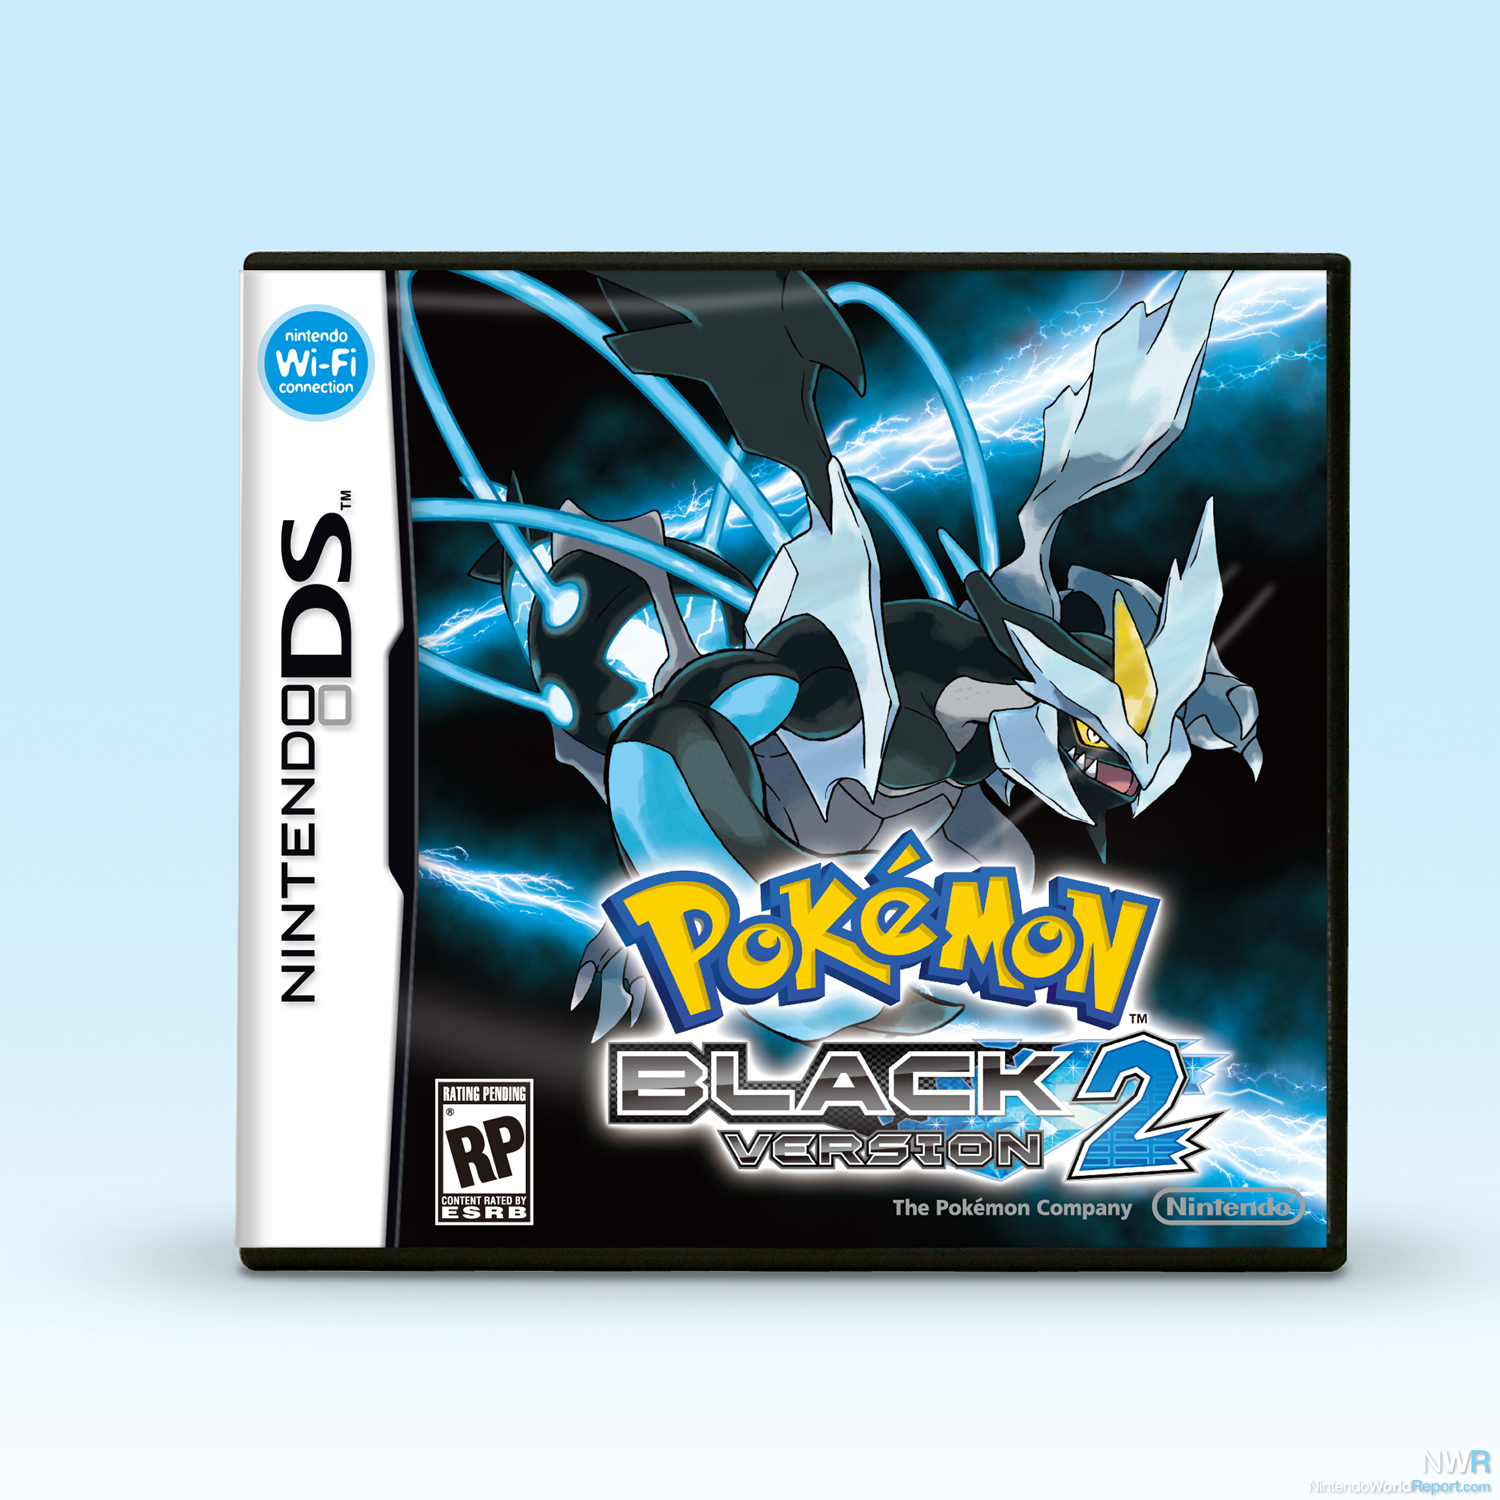 Pokémon Black and White 2 Get North American Box Art, More Details - News -  Nintendo World Report